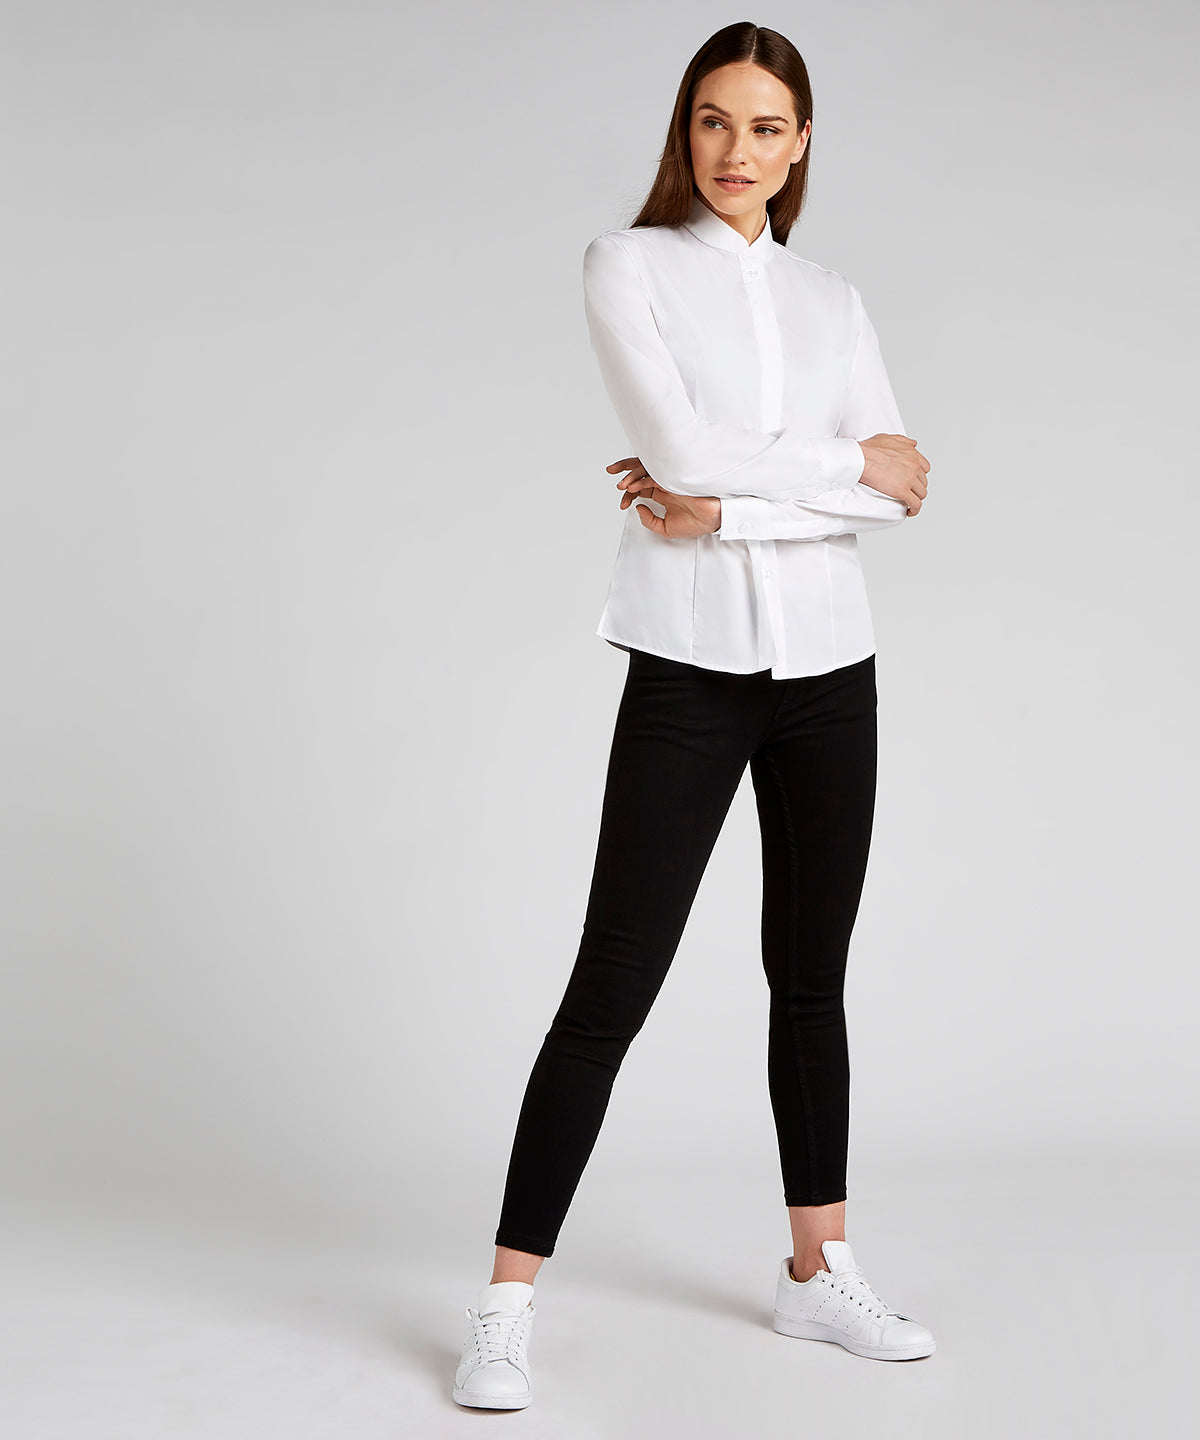 Bolir - Women's Mandarin Collar Shirt Long-sleeved (tailored Fit)